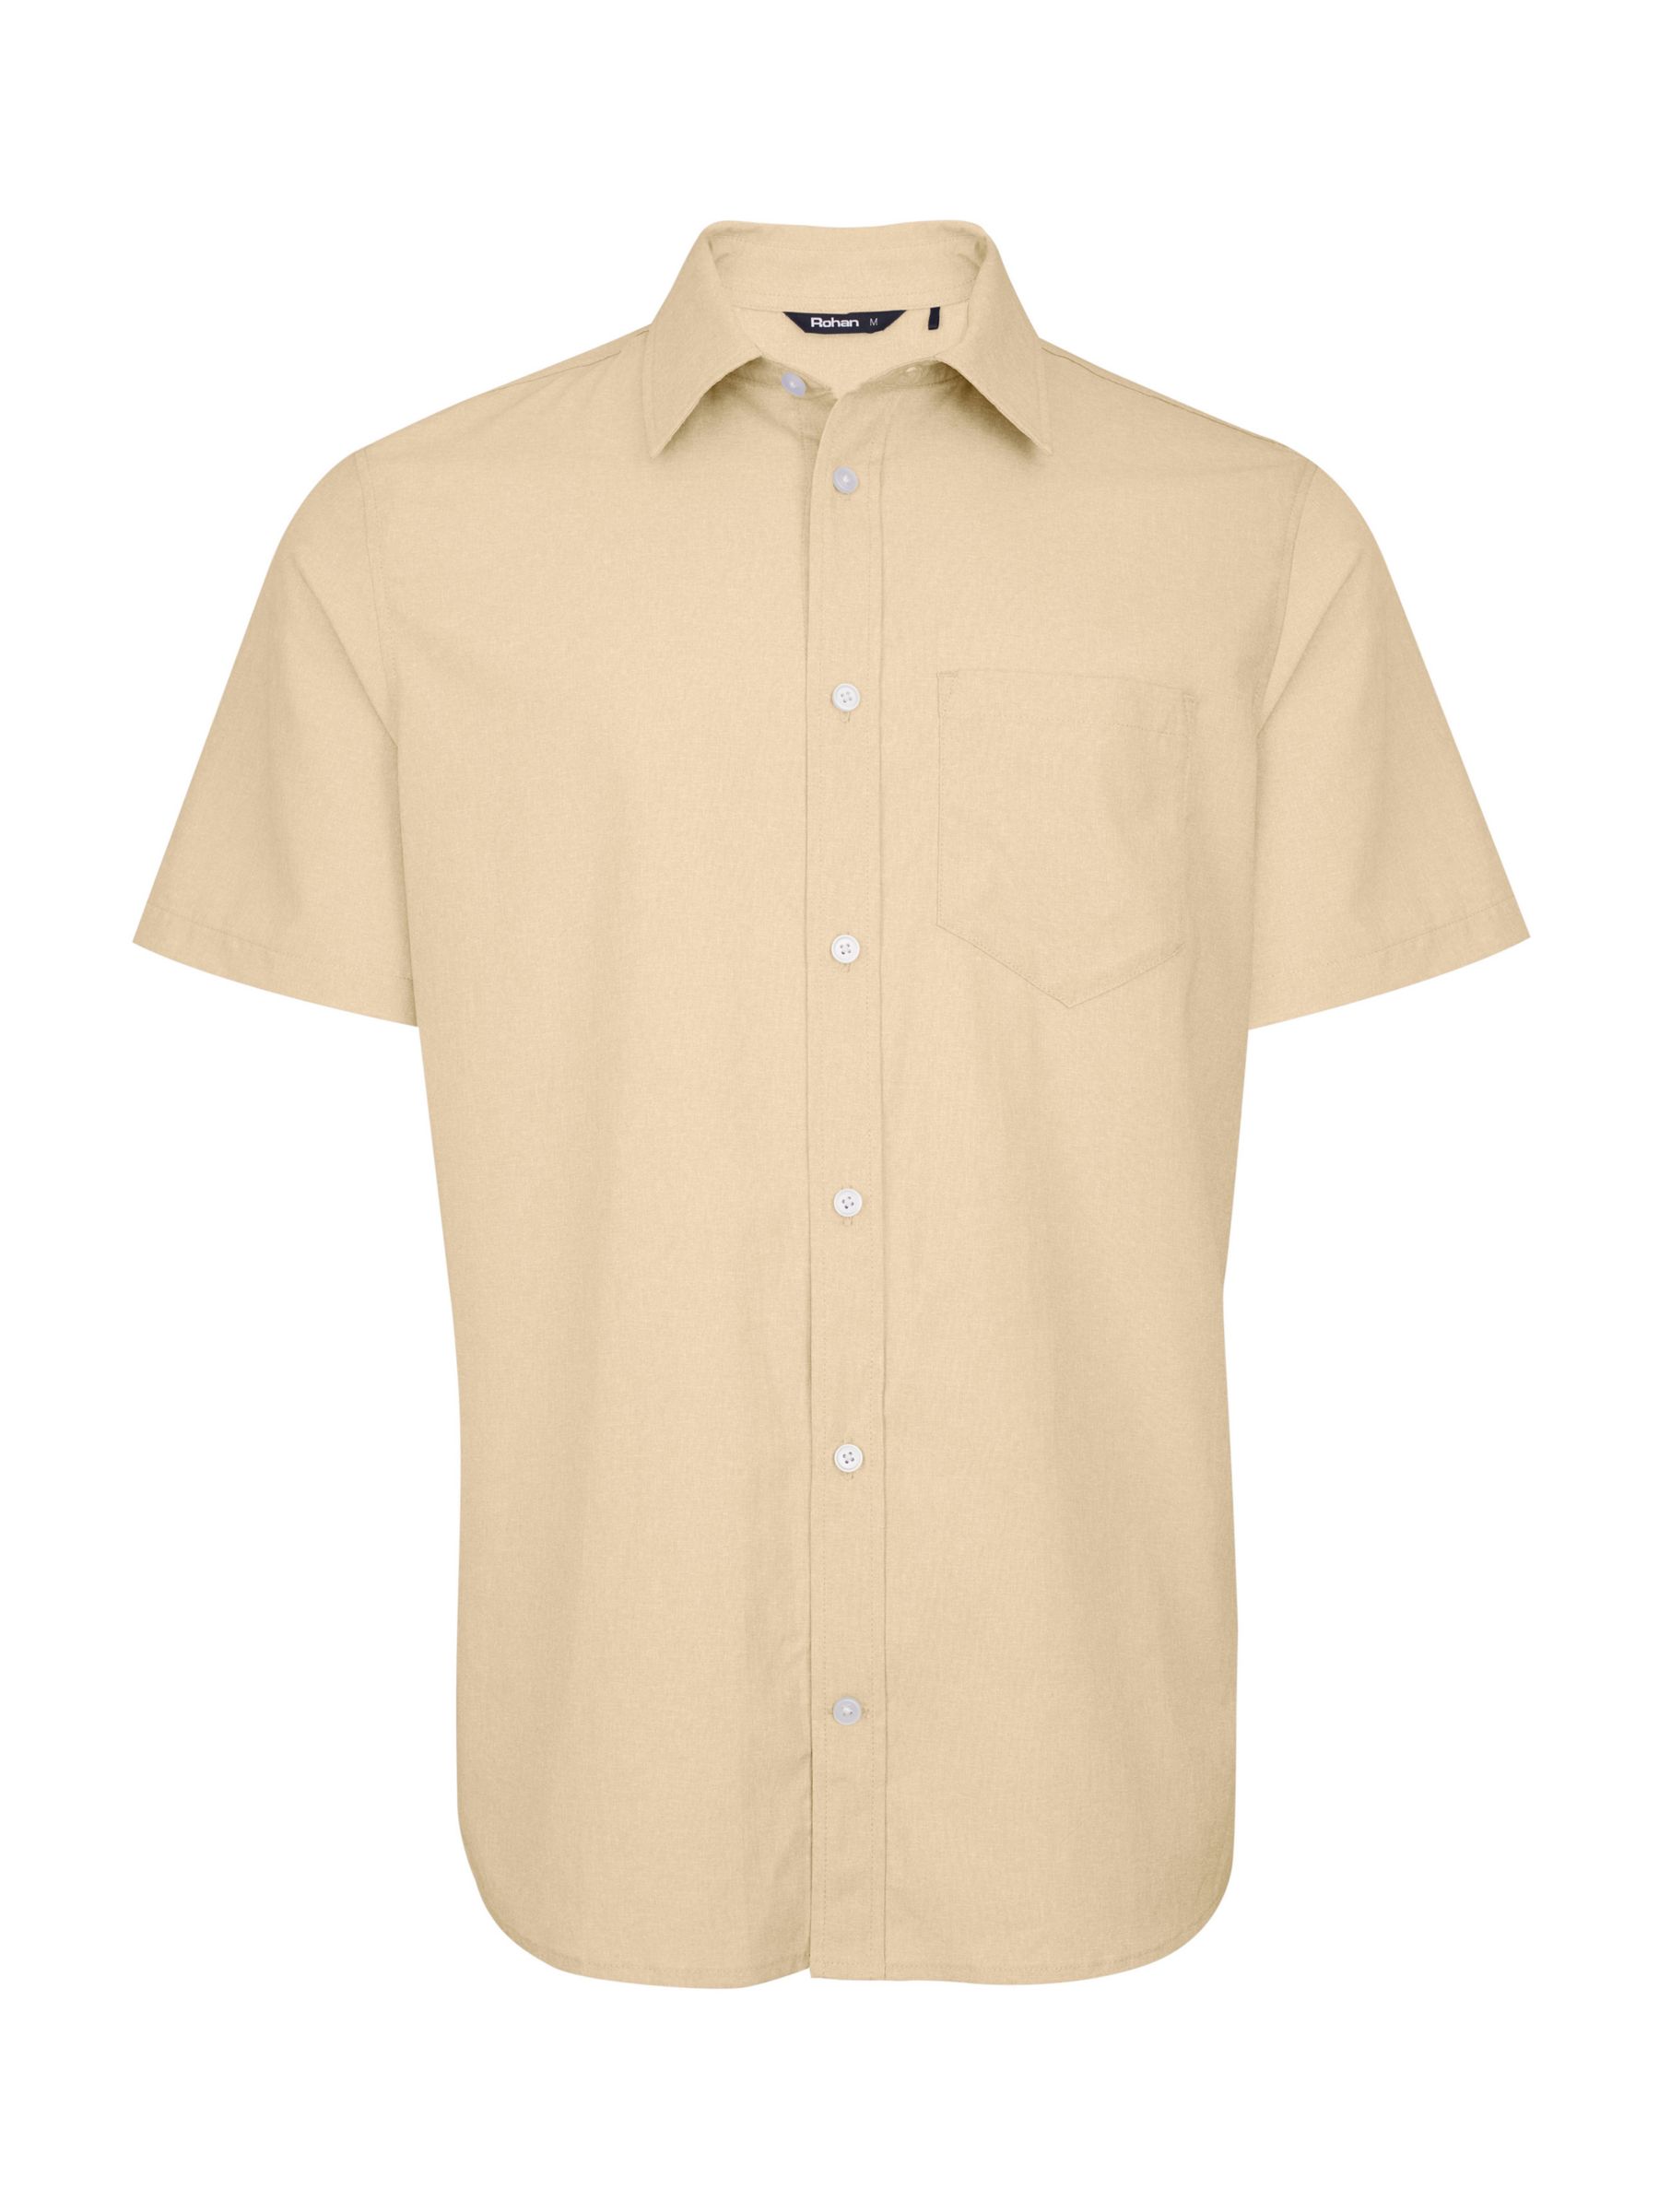 Buy Rohan Finchley Lightweight Short Sleeve Shirt, Iris Yellow Online at johnlewis.com